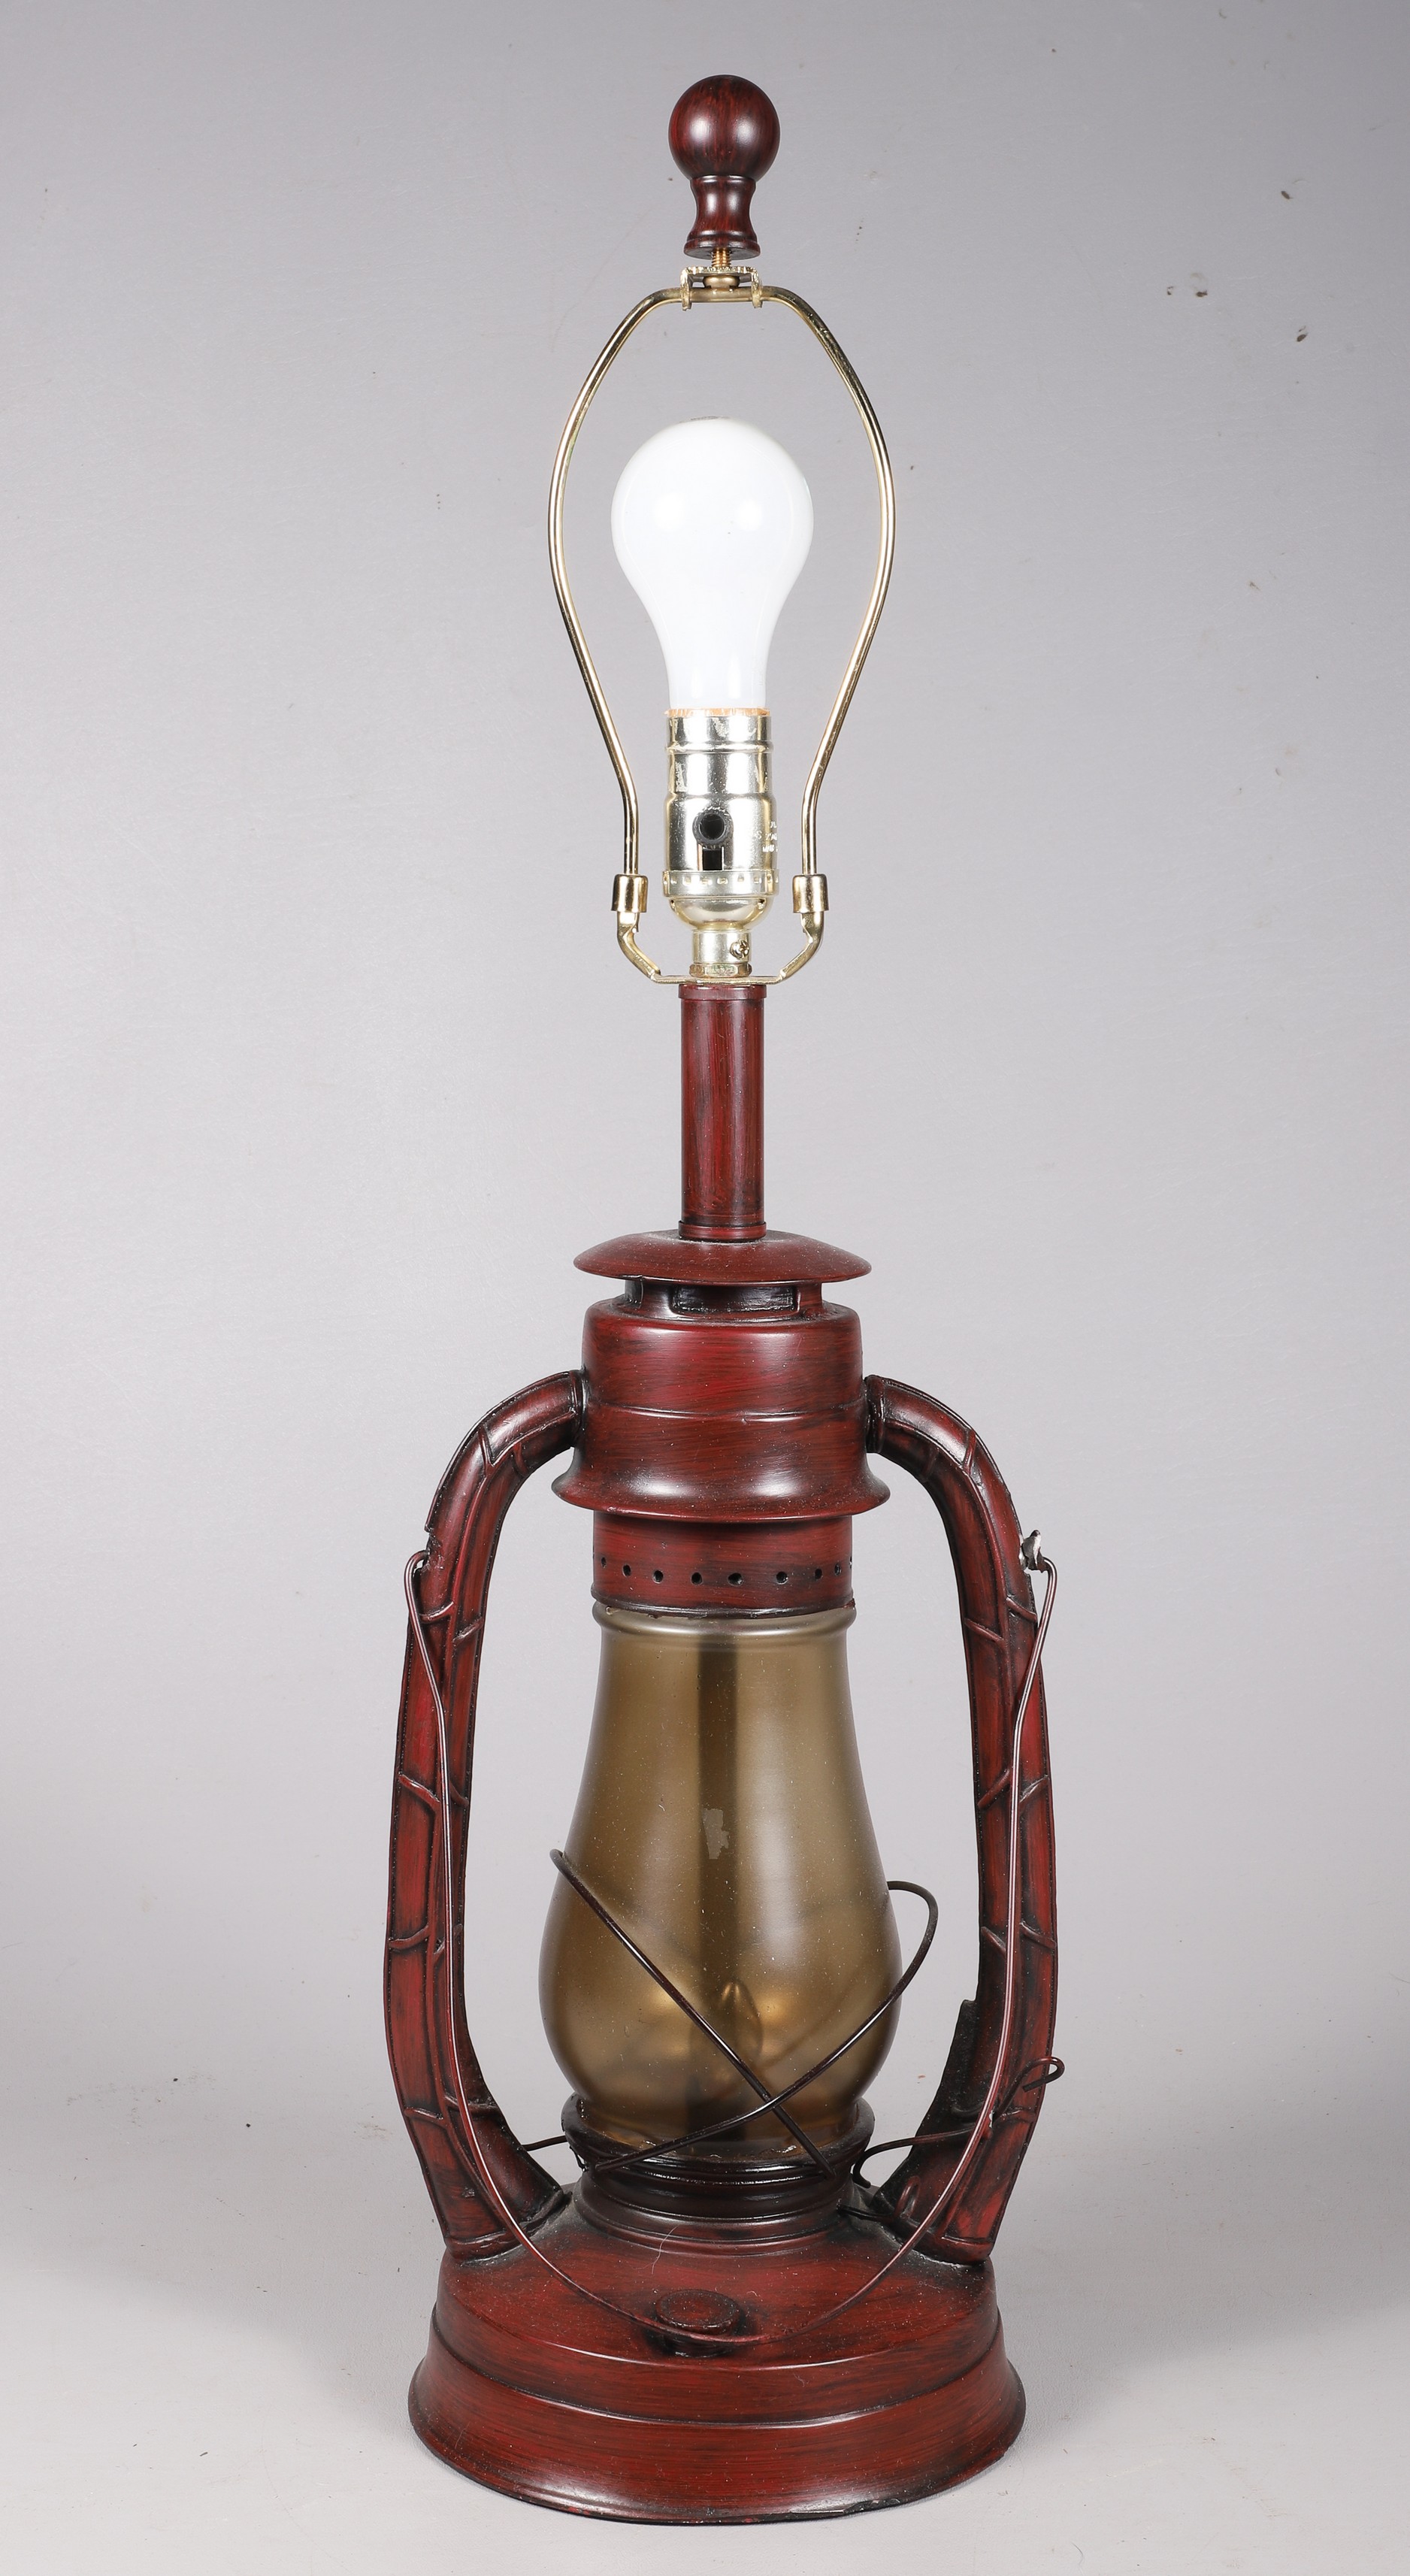 Railroad lantern form table lamp, 28